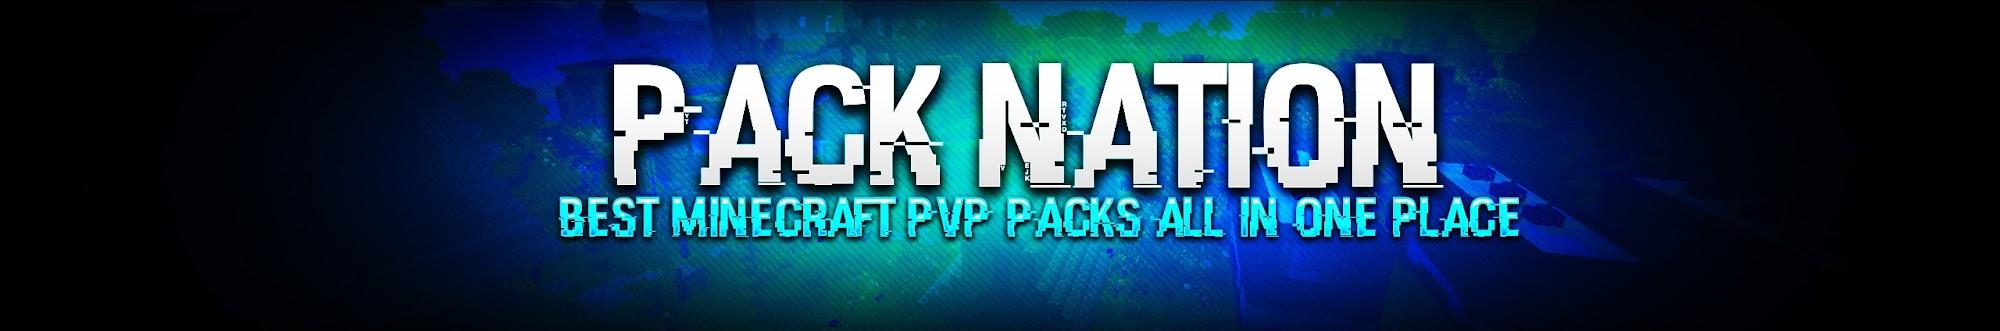 Pack Nation